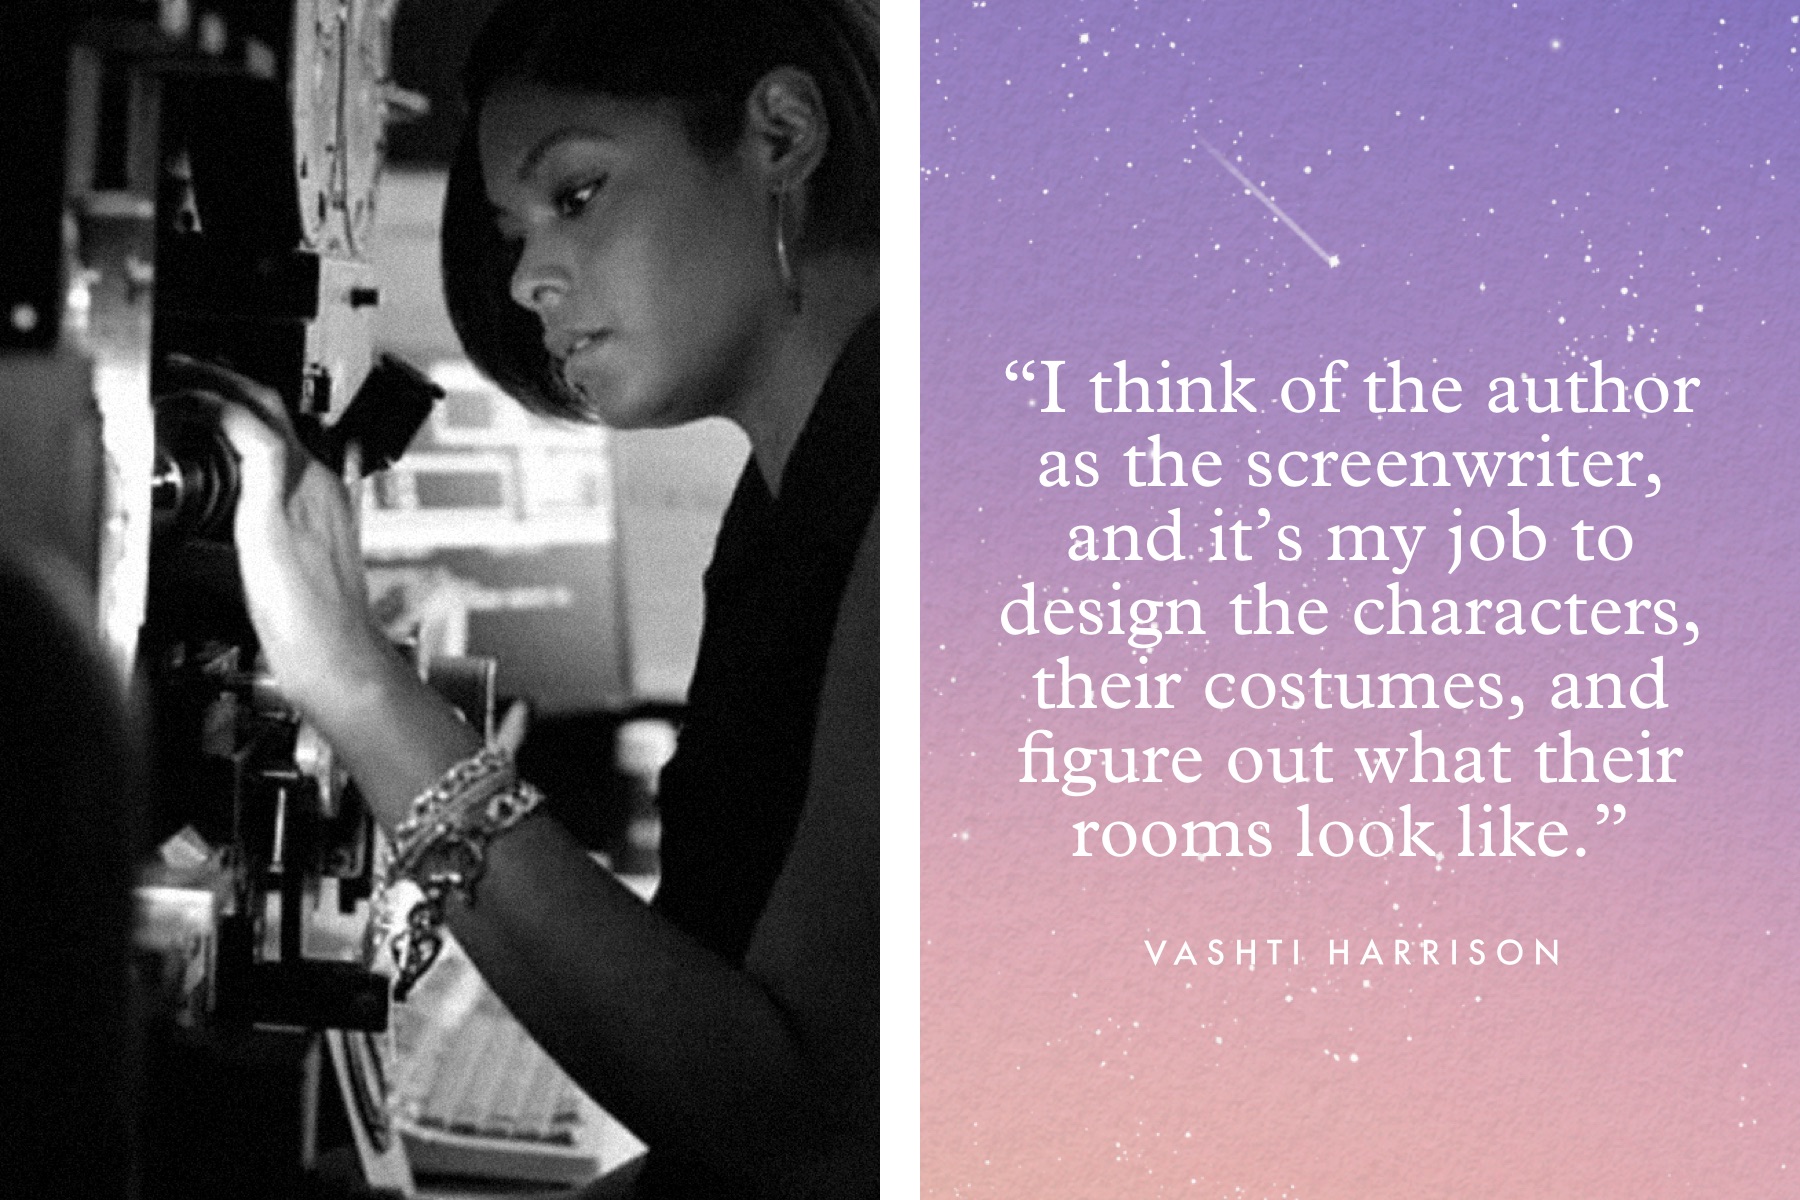 Left: Vashti Harrison working with a film camera | Right: Quote by Vashti Harrison